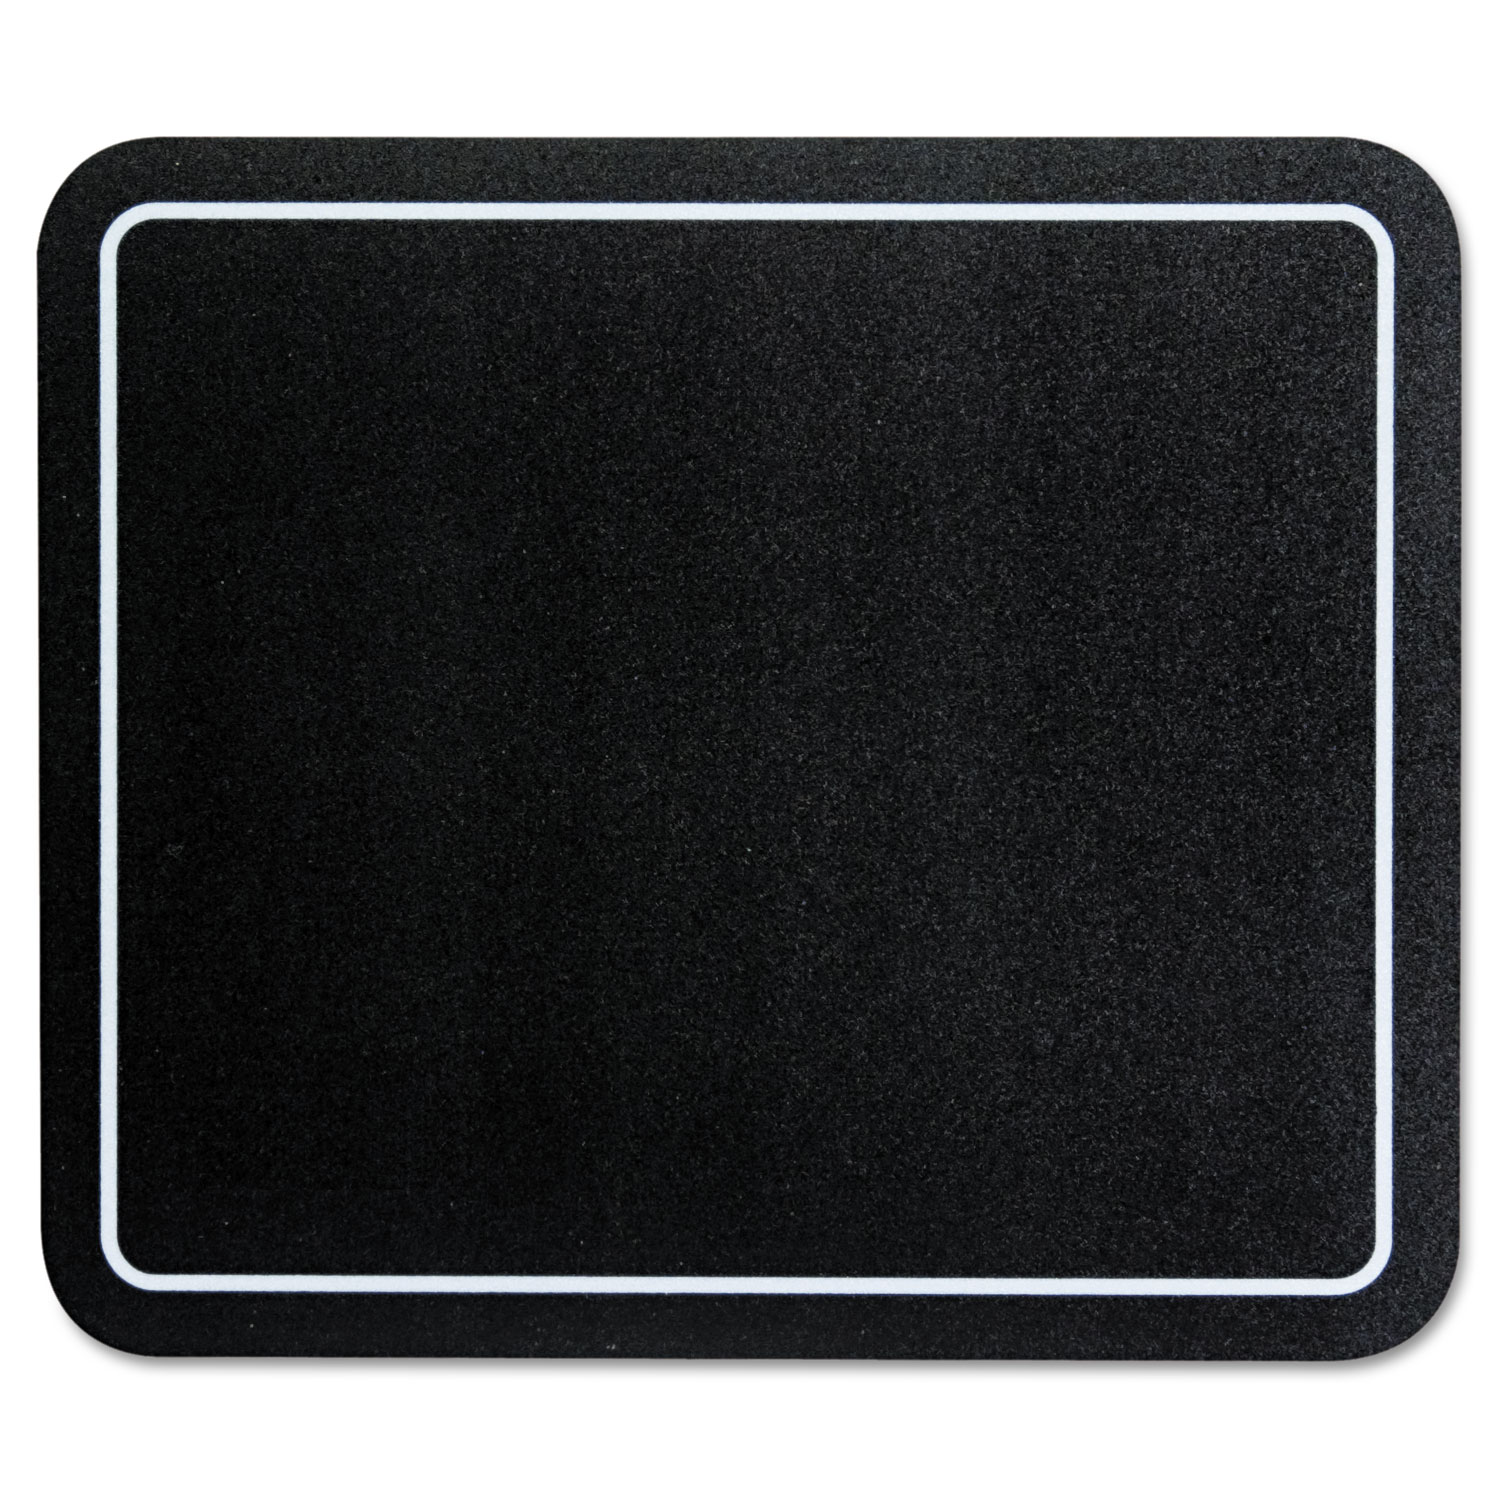 Optical Mouse Pad, 9 x 7-3/4 x 1/8, Black